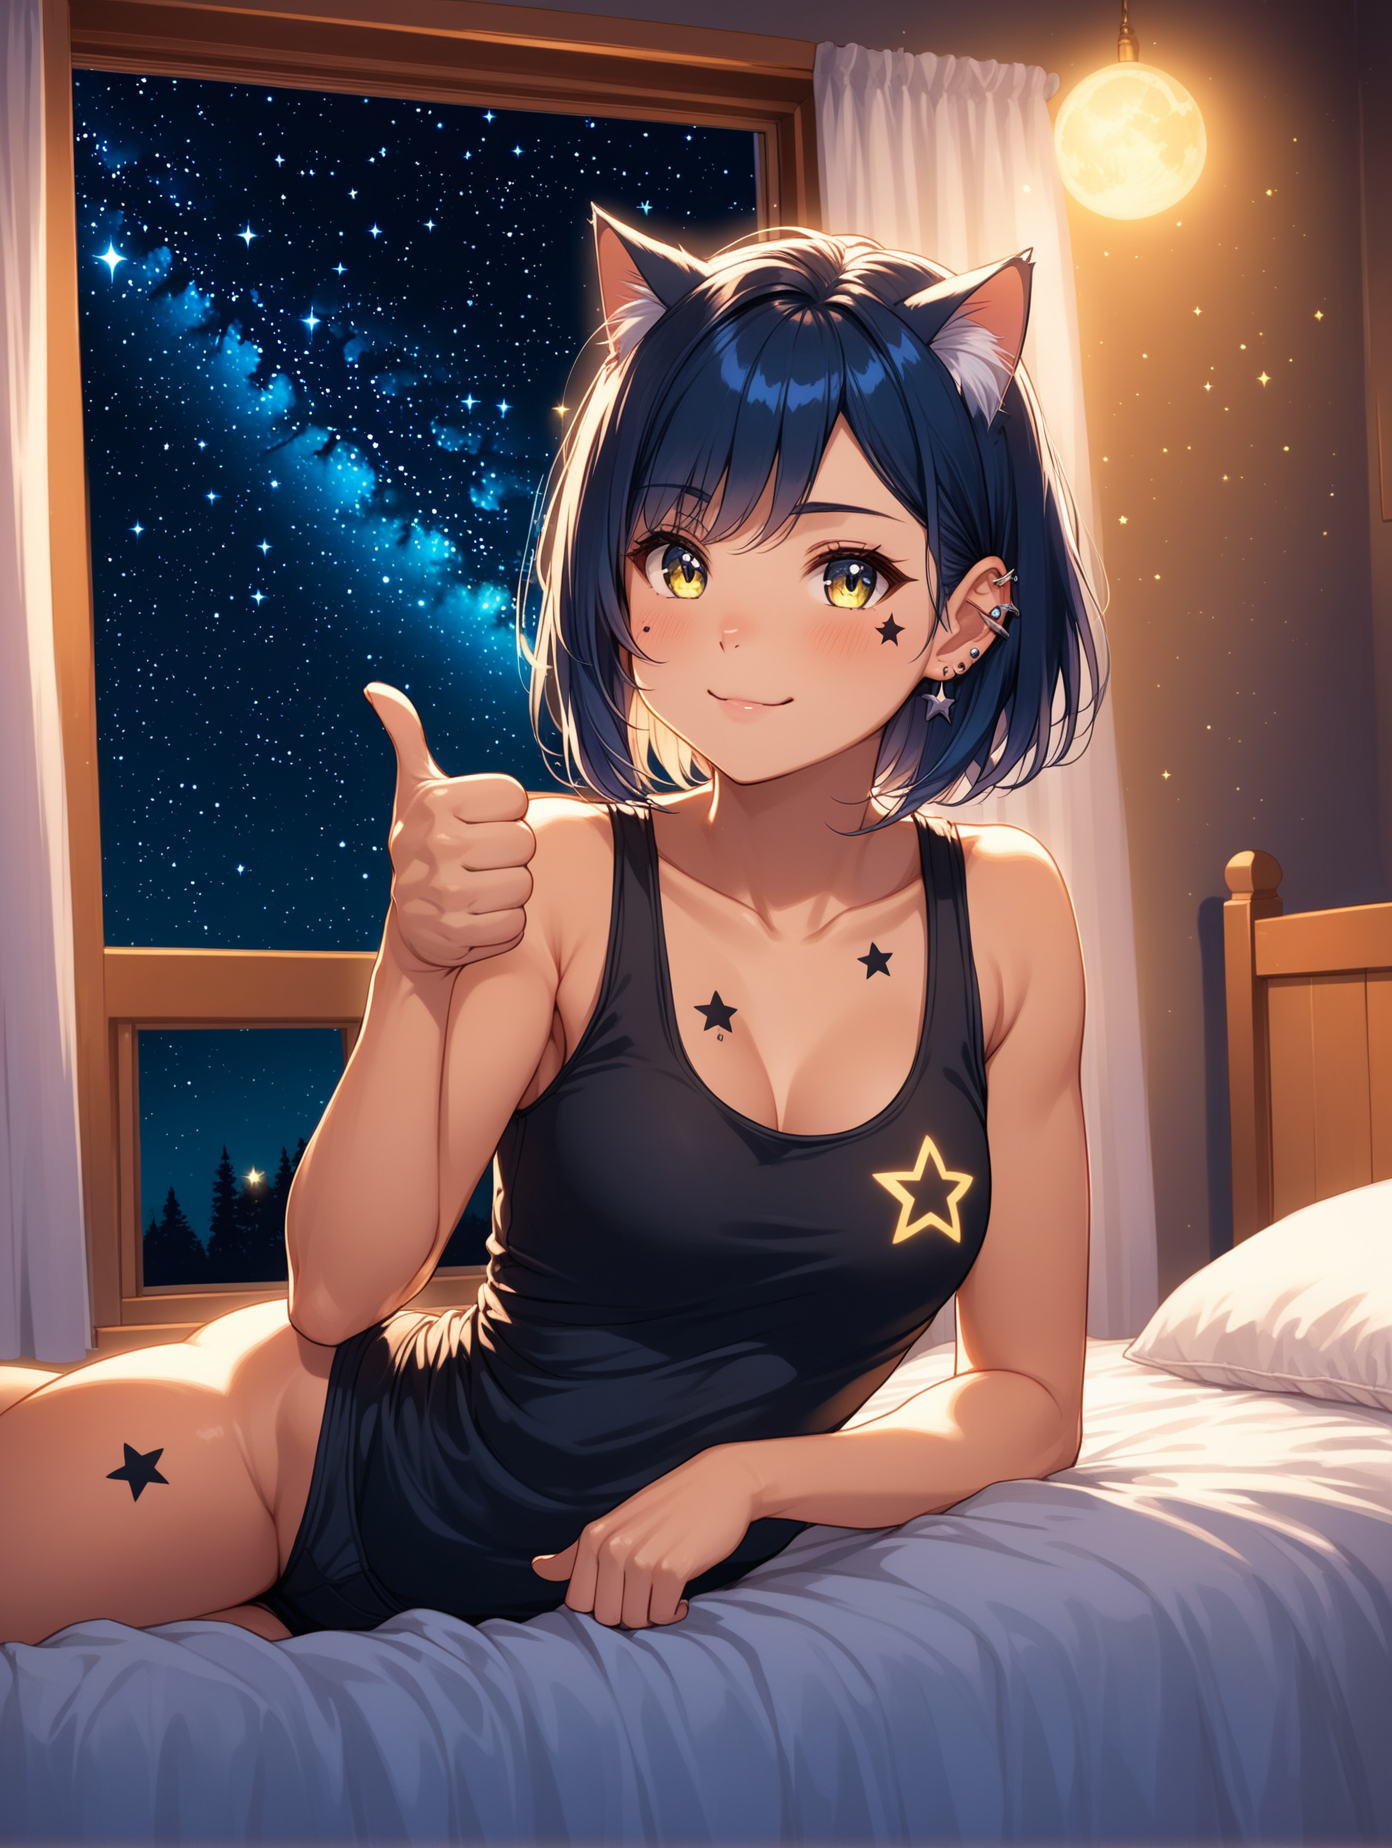 Enchanted Night Sexy 24YearOld Cat Girl Thumbs Up in Starlit Bedroom